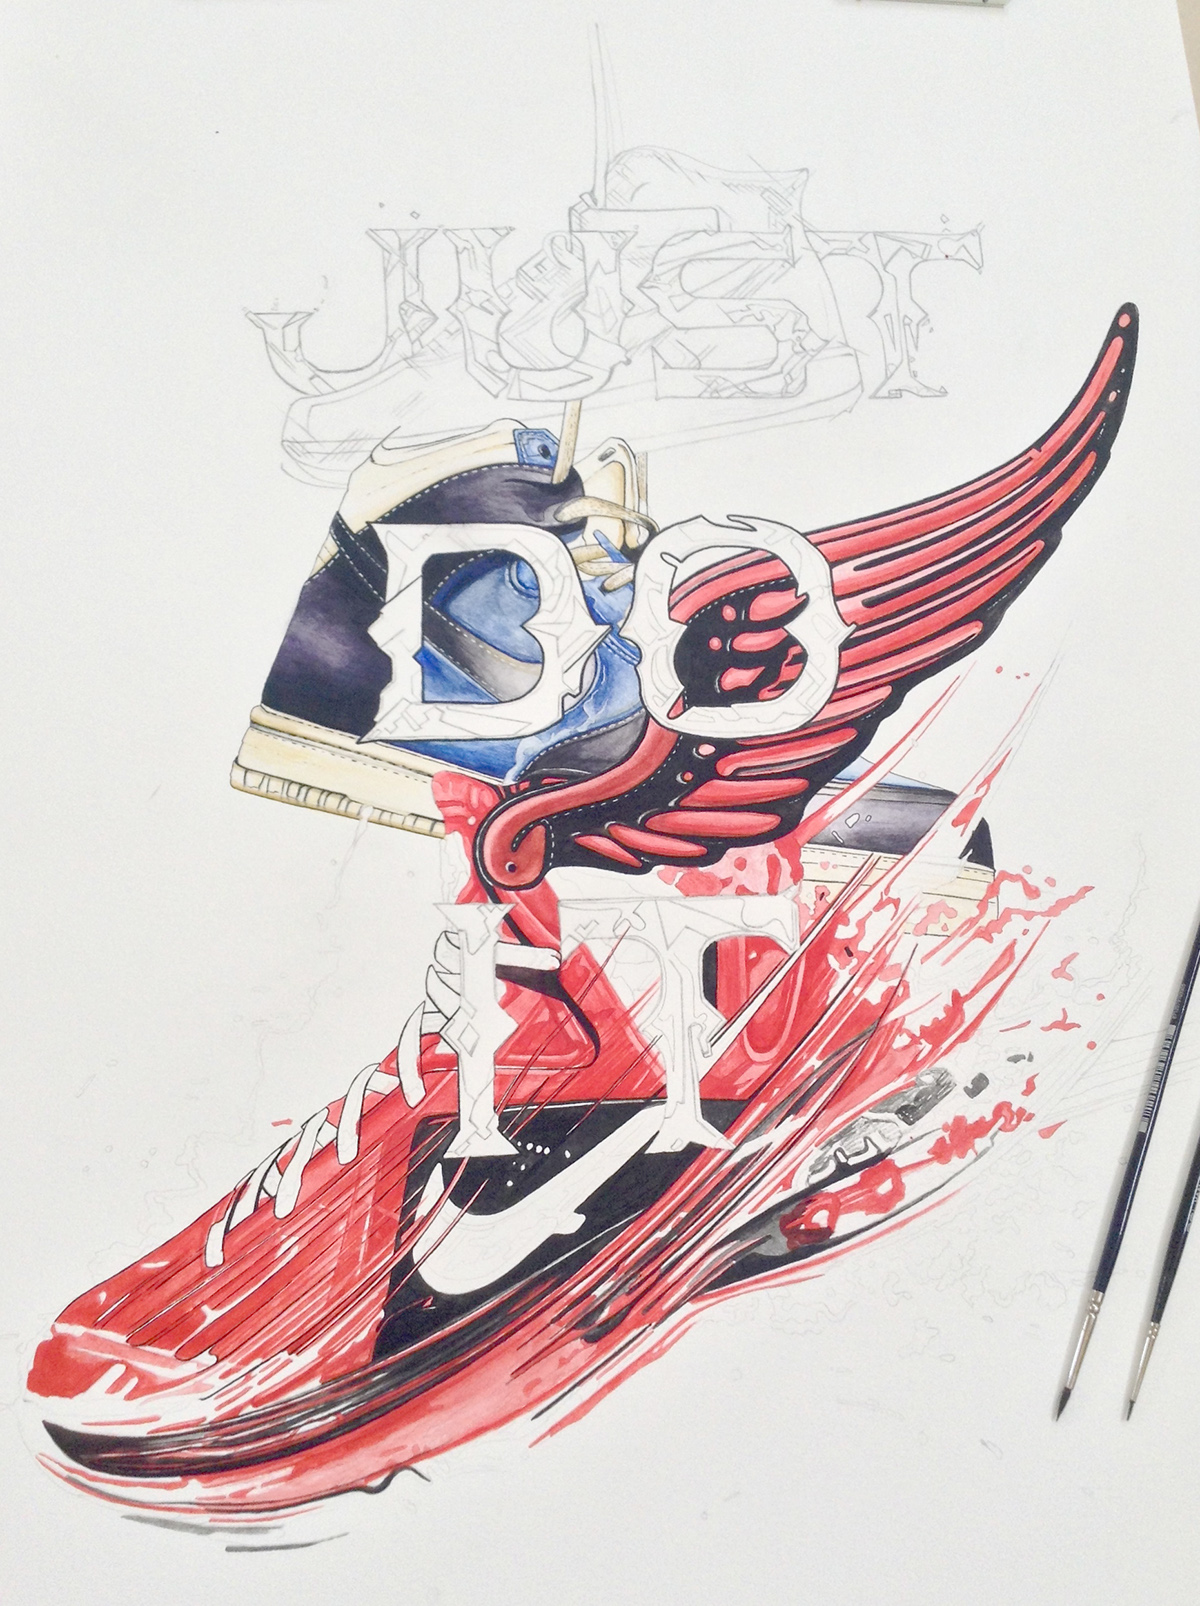 Nike illustra photo air LeBron kobe james malone jordan art digital water colors Snoop Dogg street arts